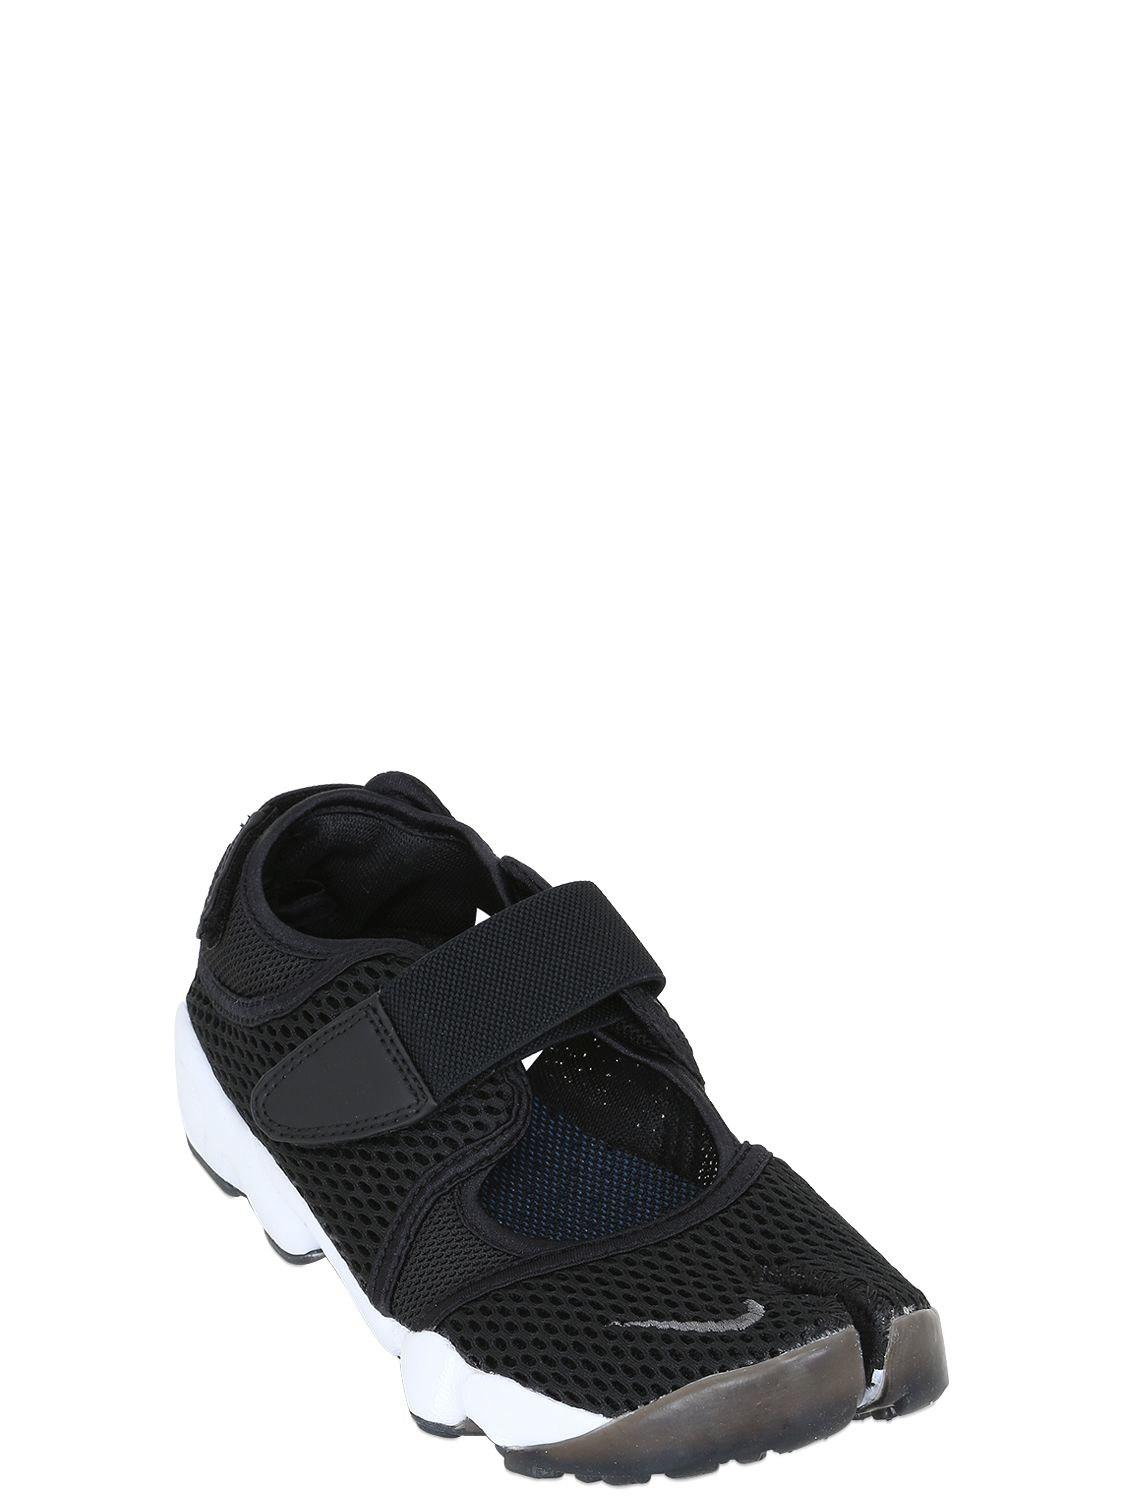 Nike Air Rift Mesh Open Sneakers in Grey/Black (Gray) - Lyst